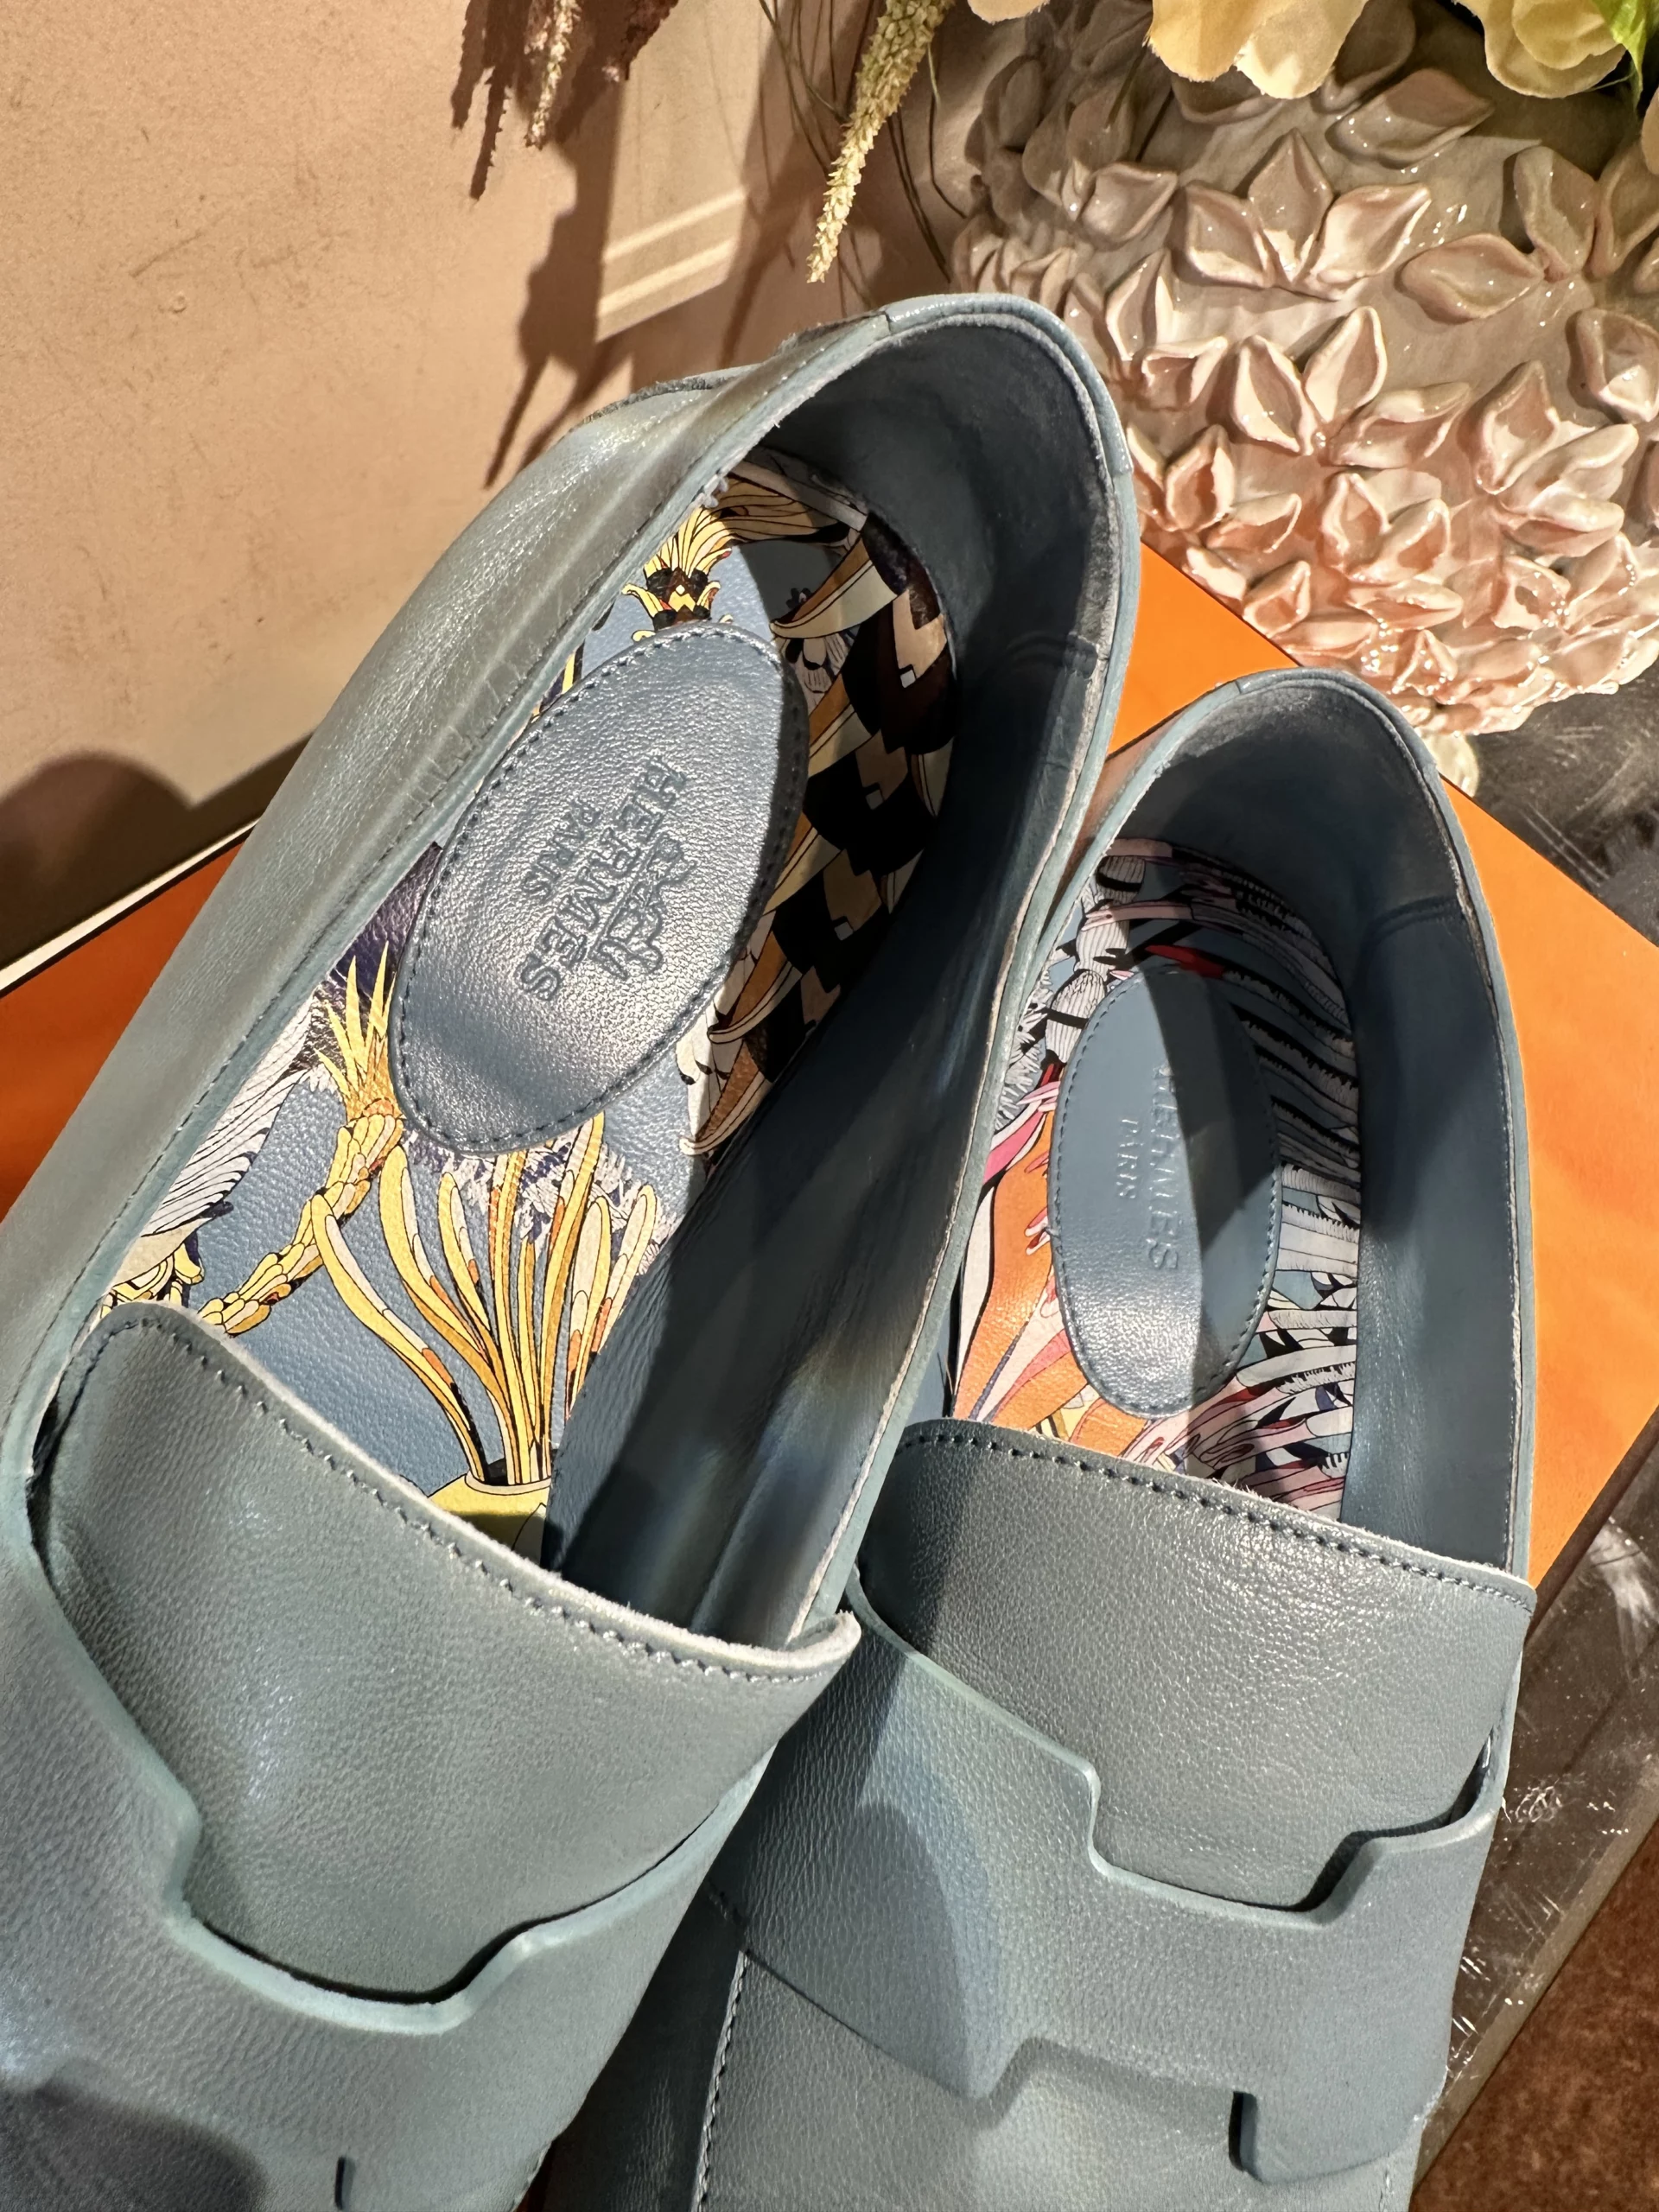 Hermes Women's White Paris Loafer 36 Shoes